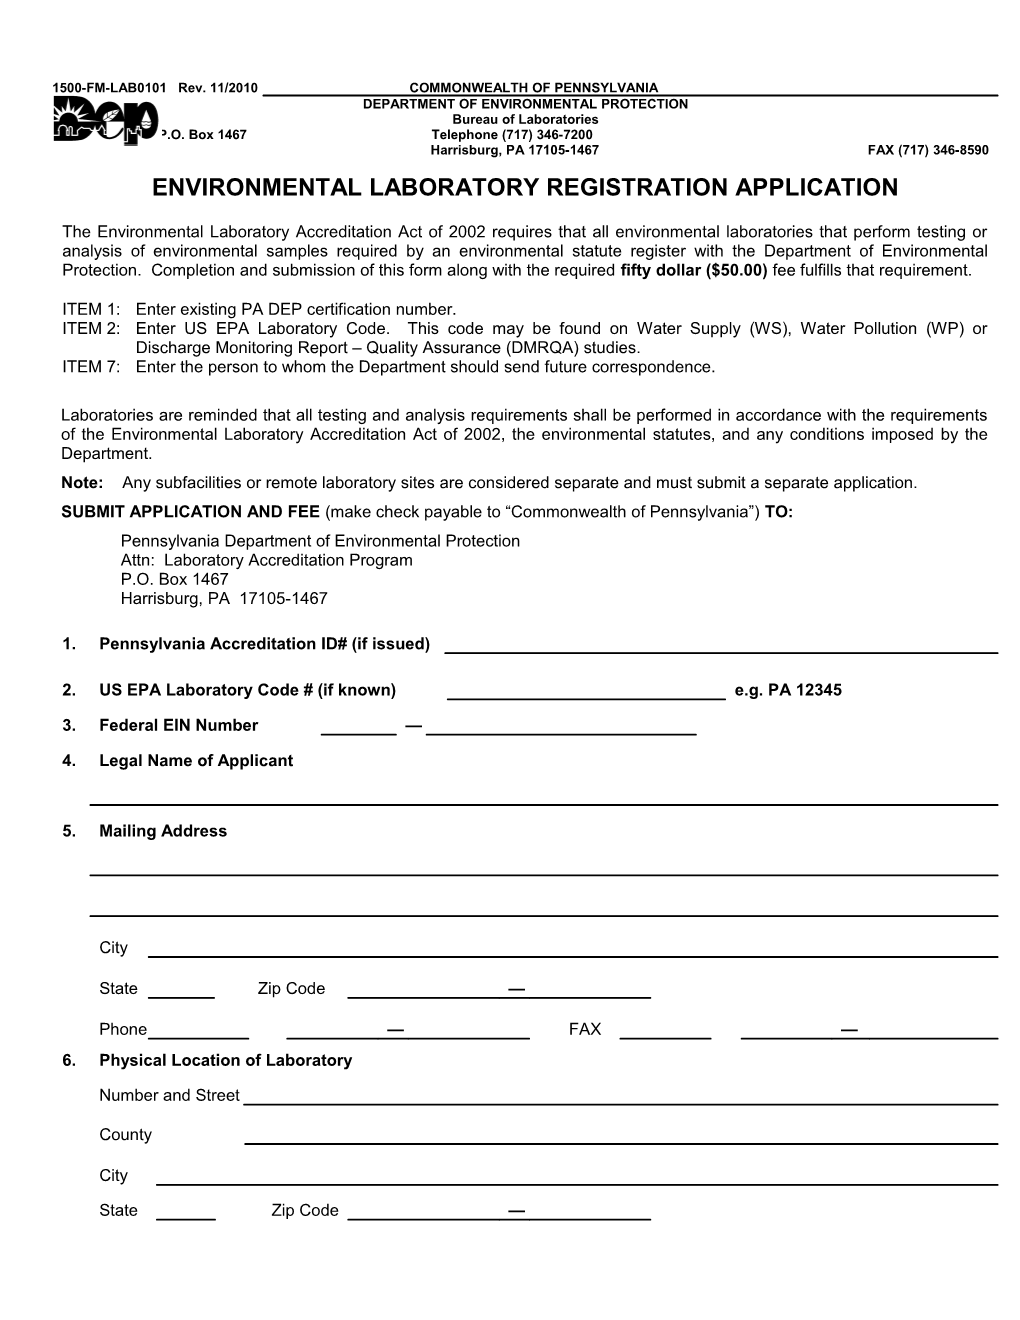 Environmental Laboratory Registration Application